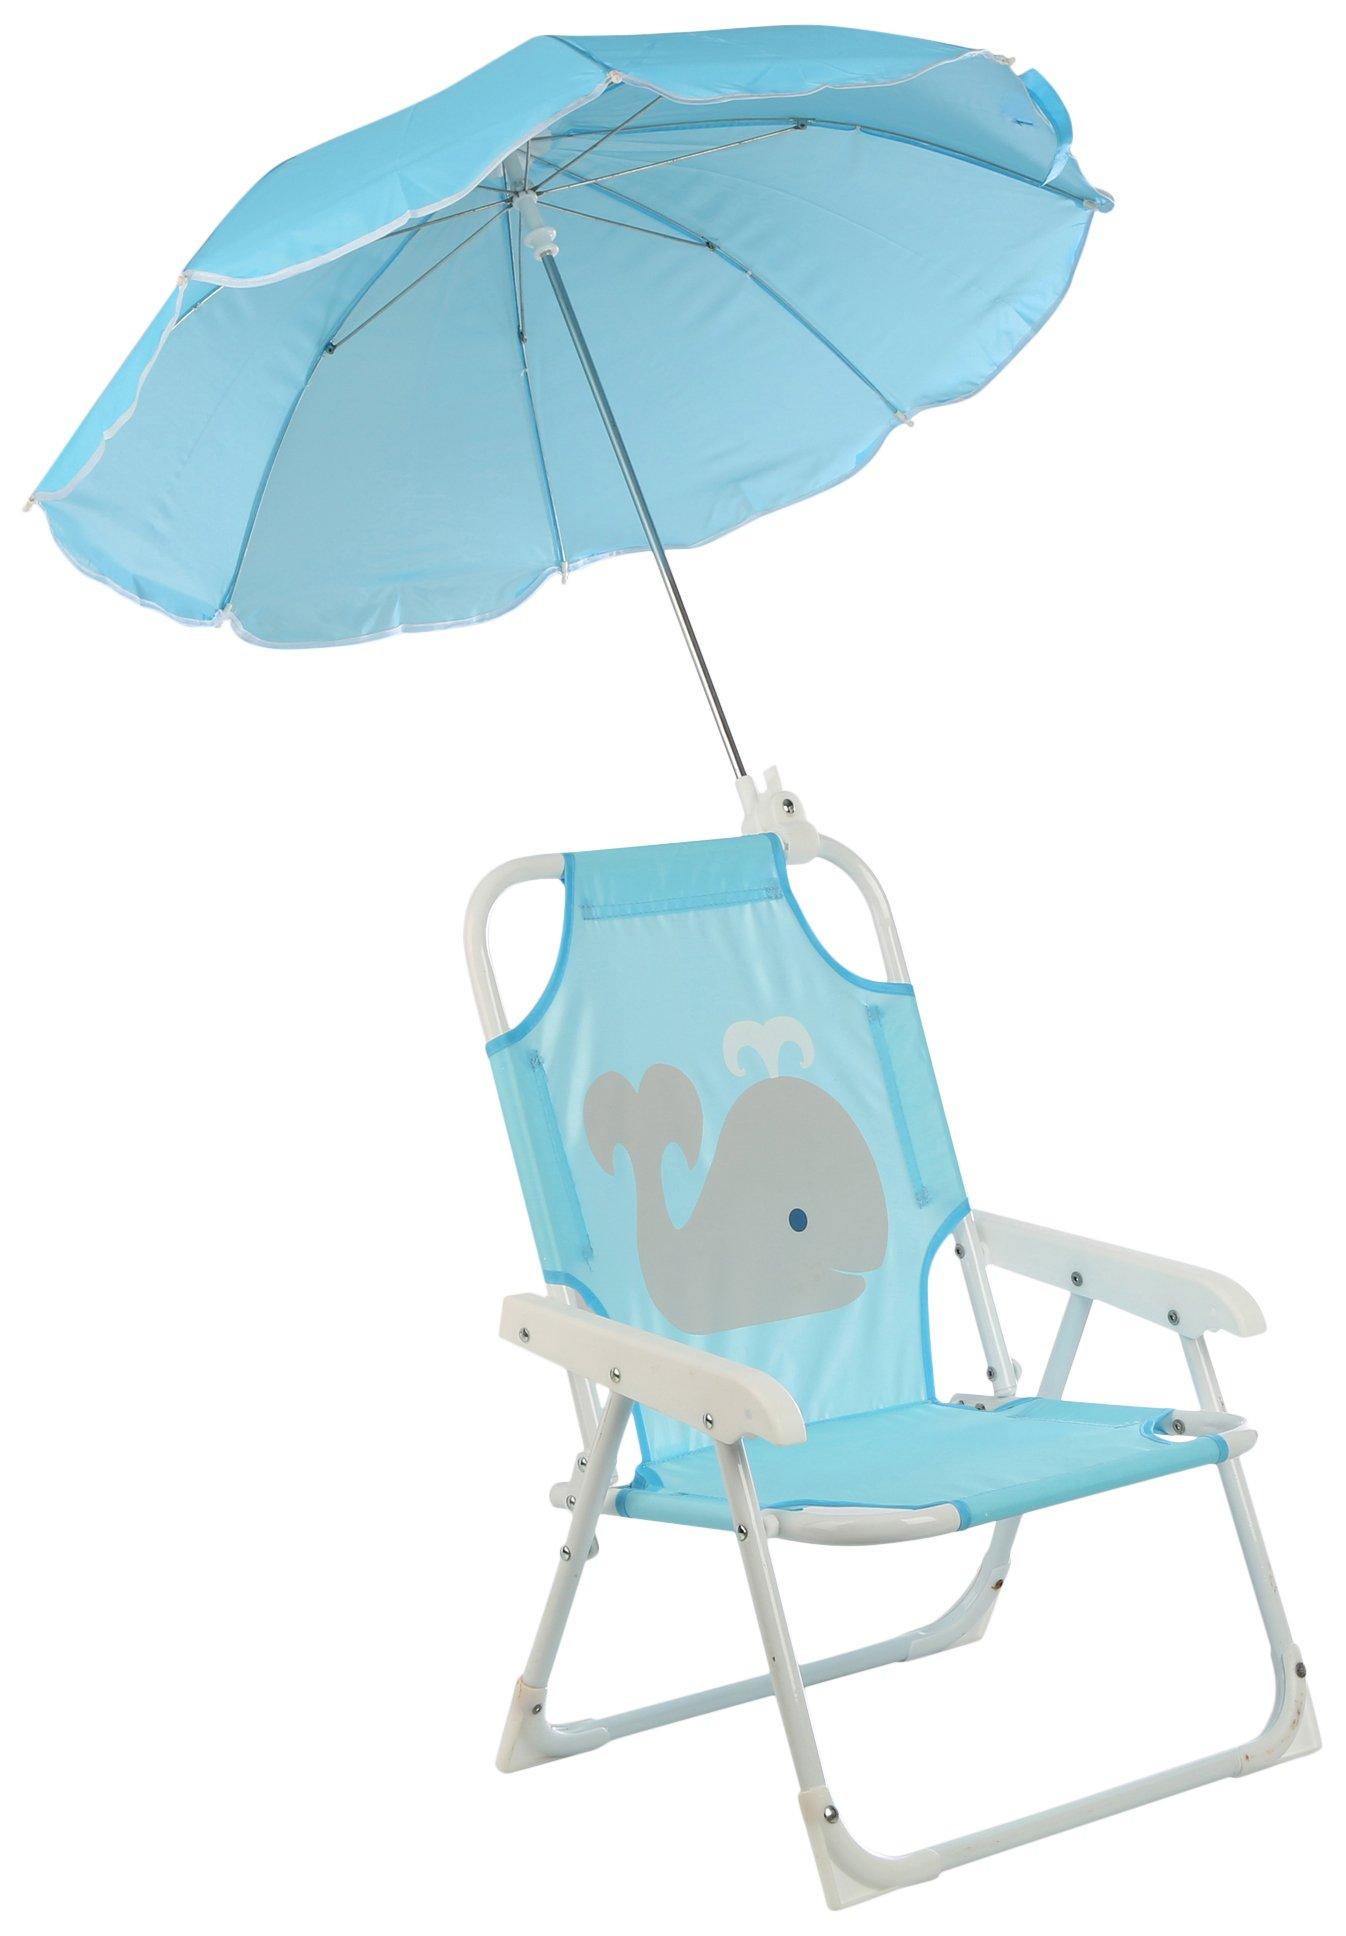 Kids Whale Beach Chair and Umbrella Combo